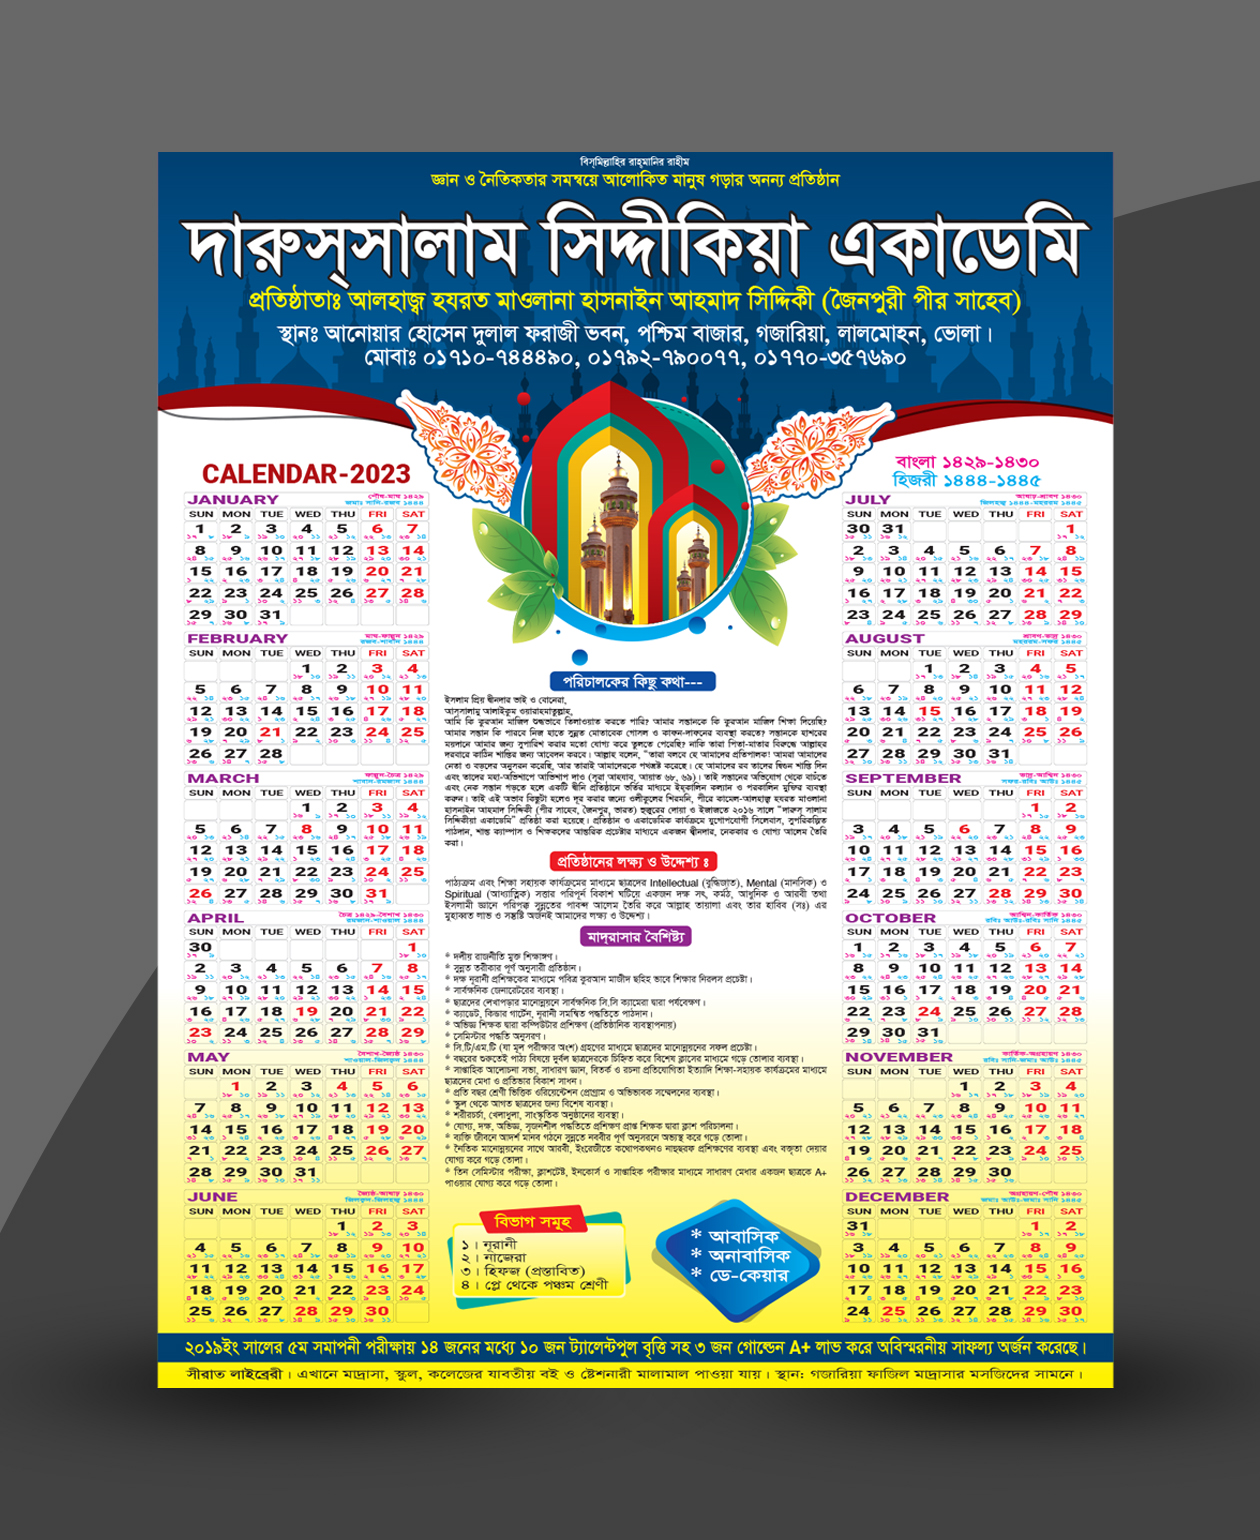 Calendar 2023 (English, Bangla, Arabic) Shorif Art